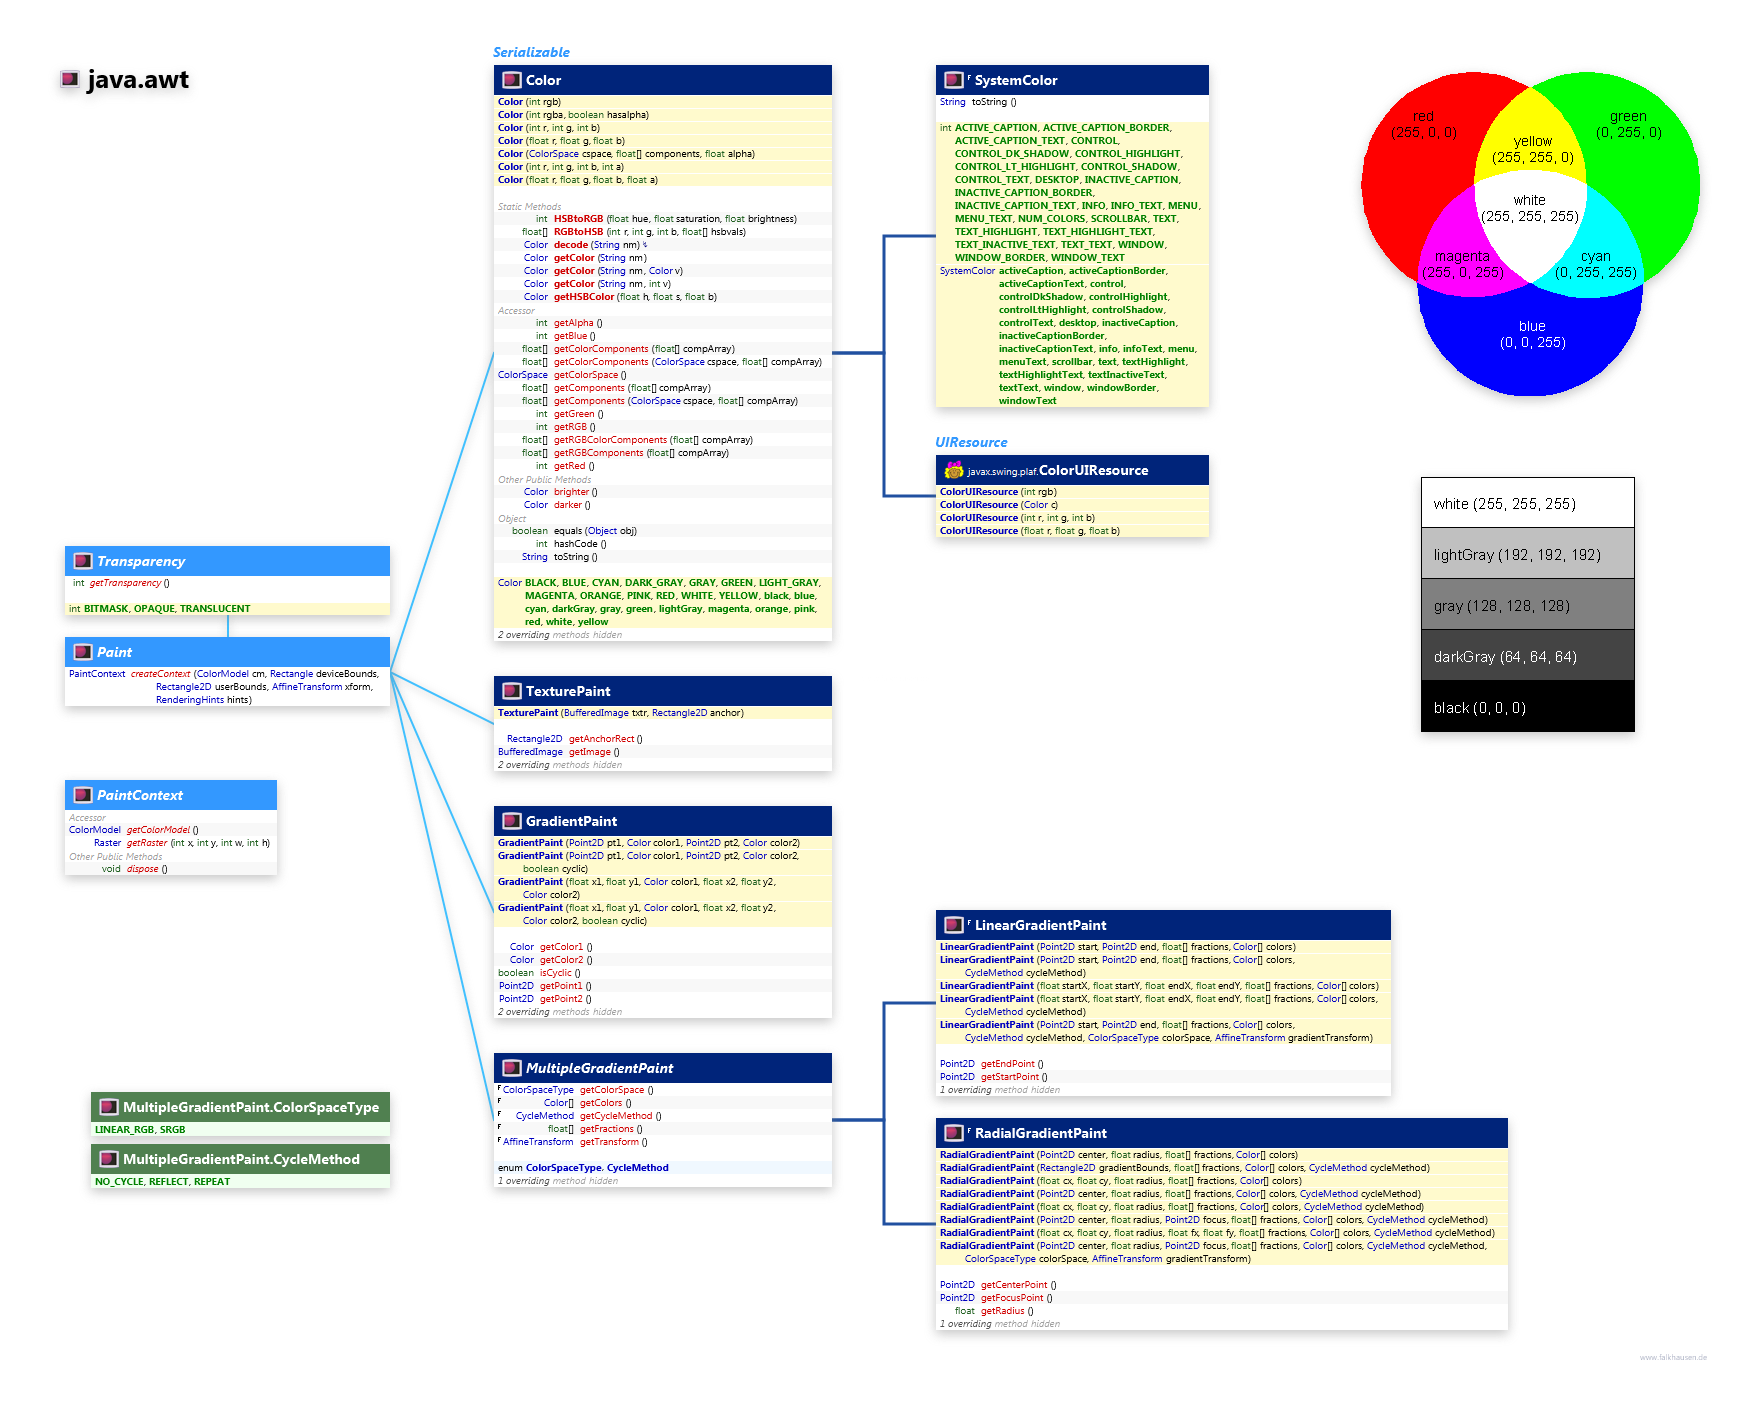 java.awt Paint class diagram and api documentation for Java 7